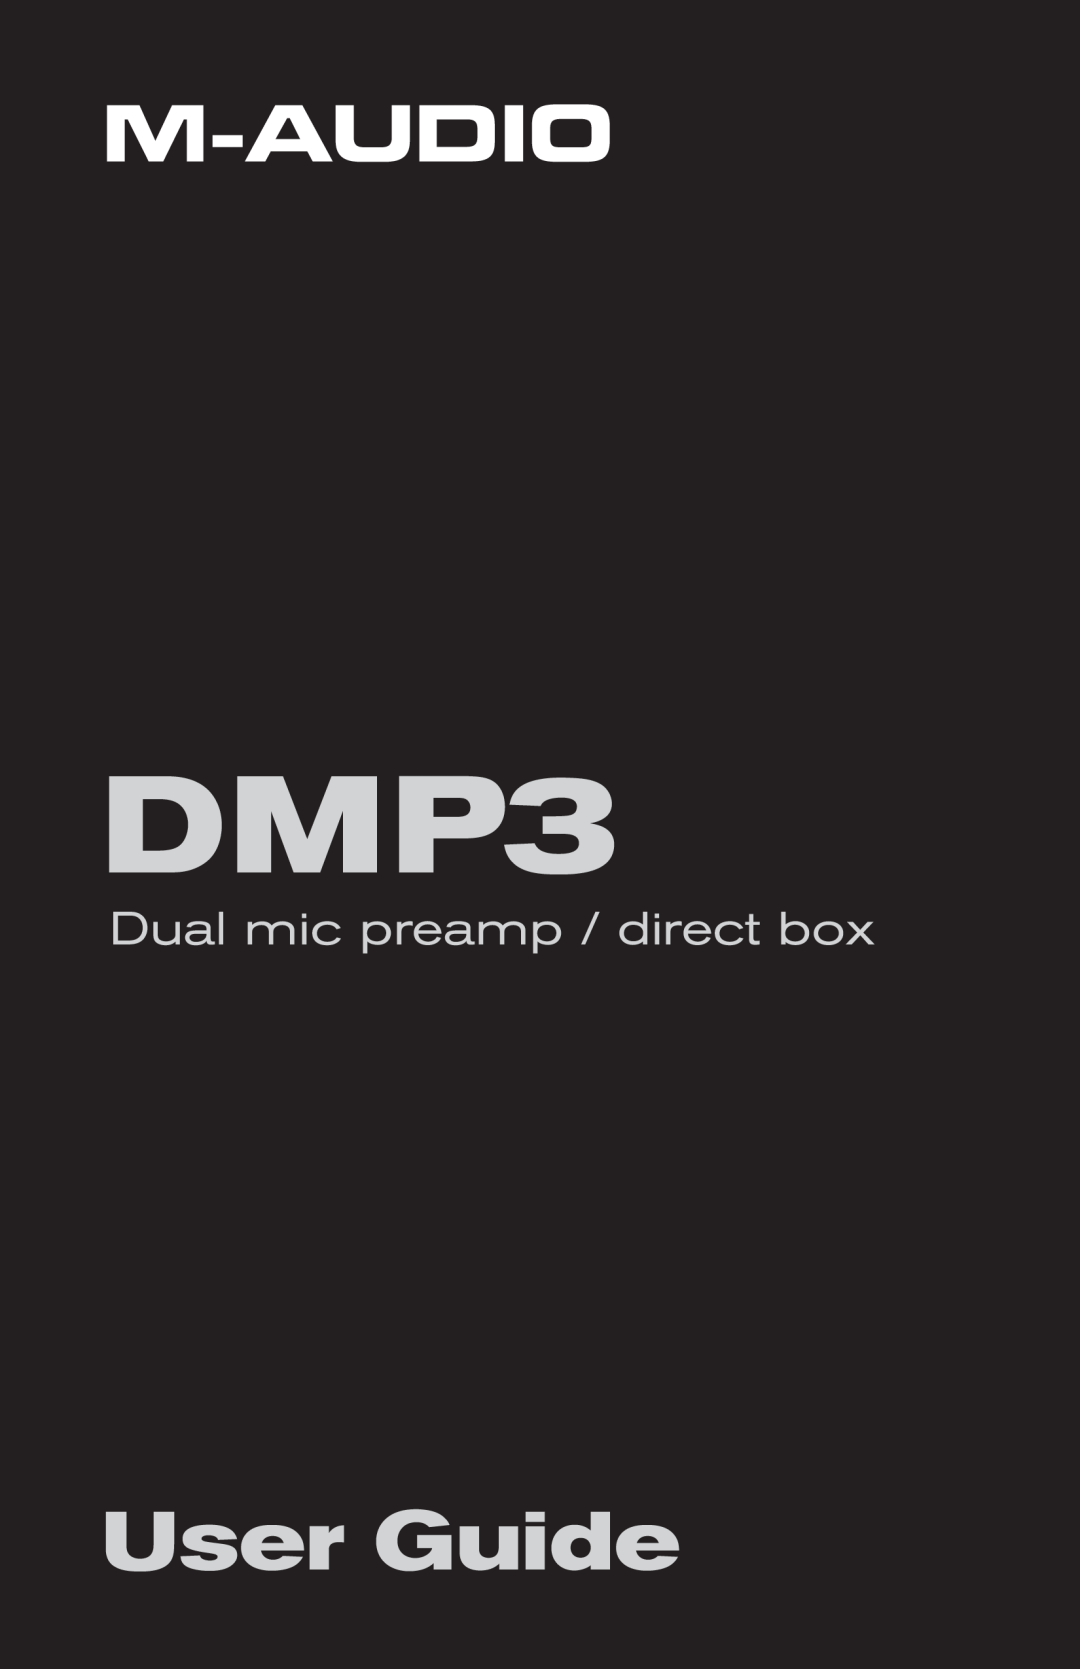 M-Audio DMP3 manual User Guide, Dual mic preamp / direct box 